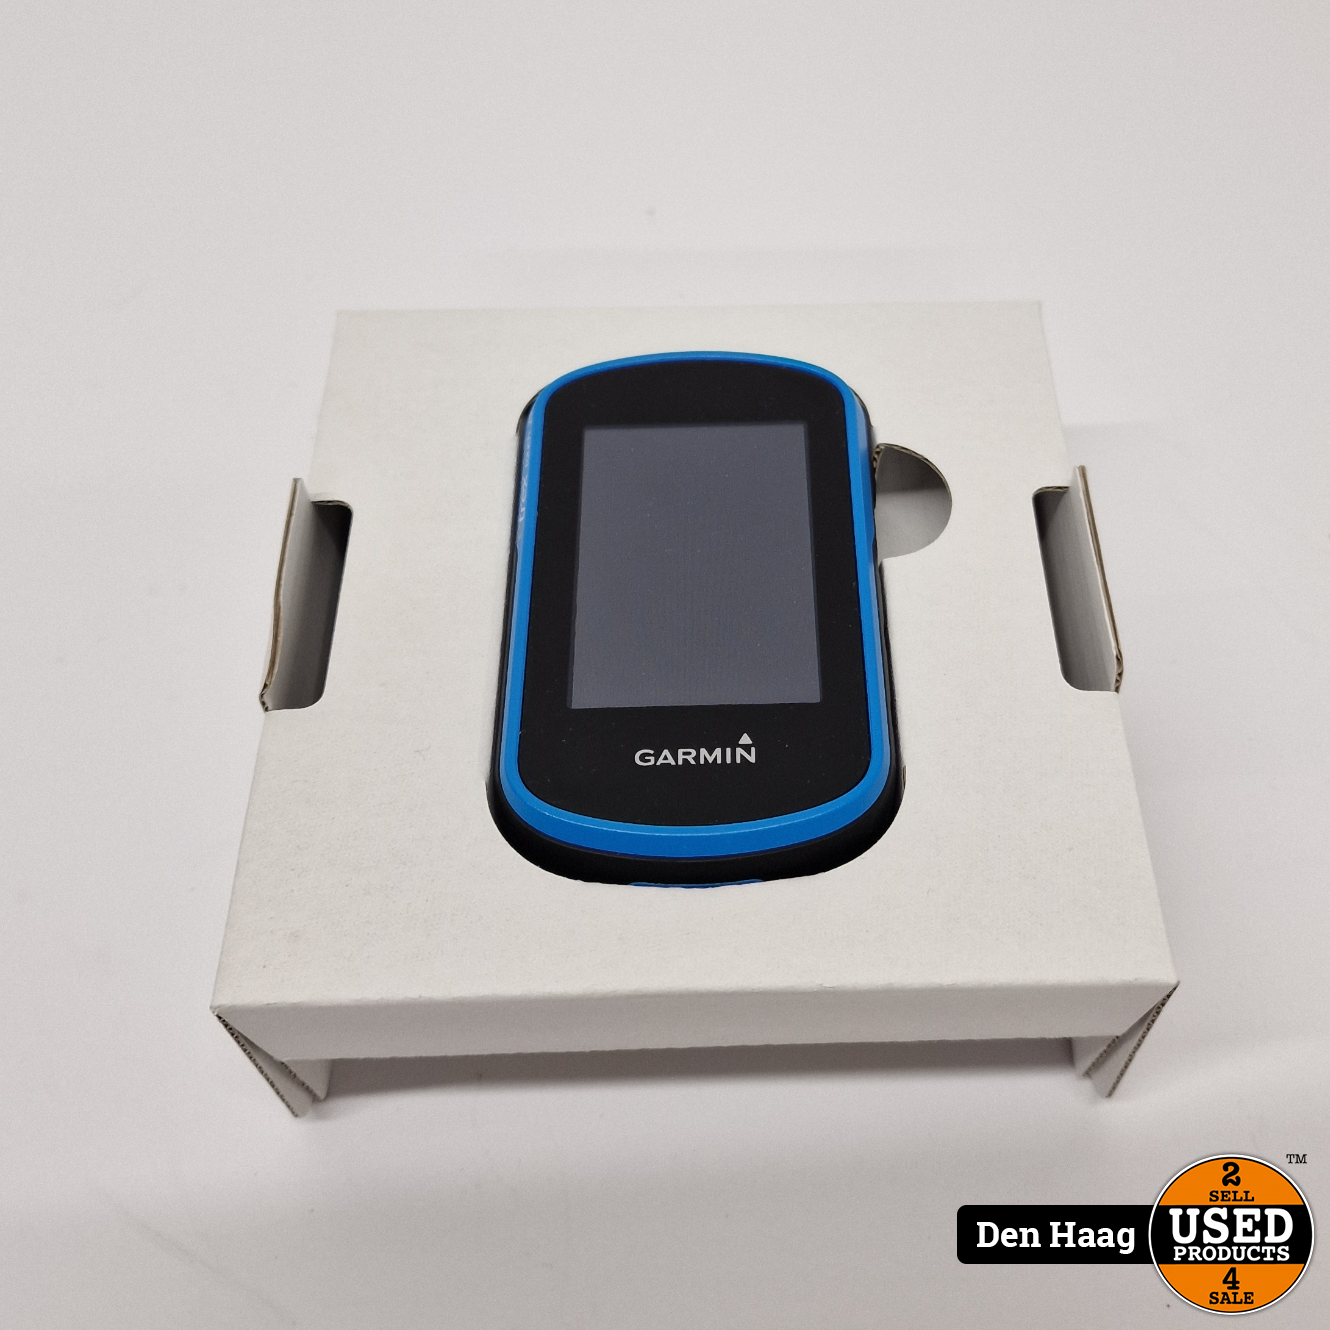 Garmin Etrex Touch 25 navigatie | nette staat - Used Products Den Haag